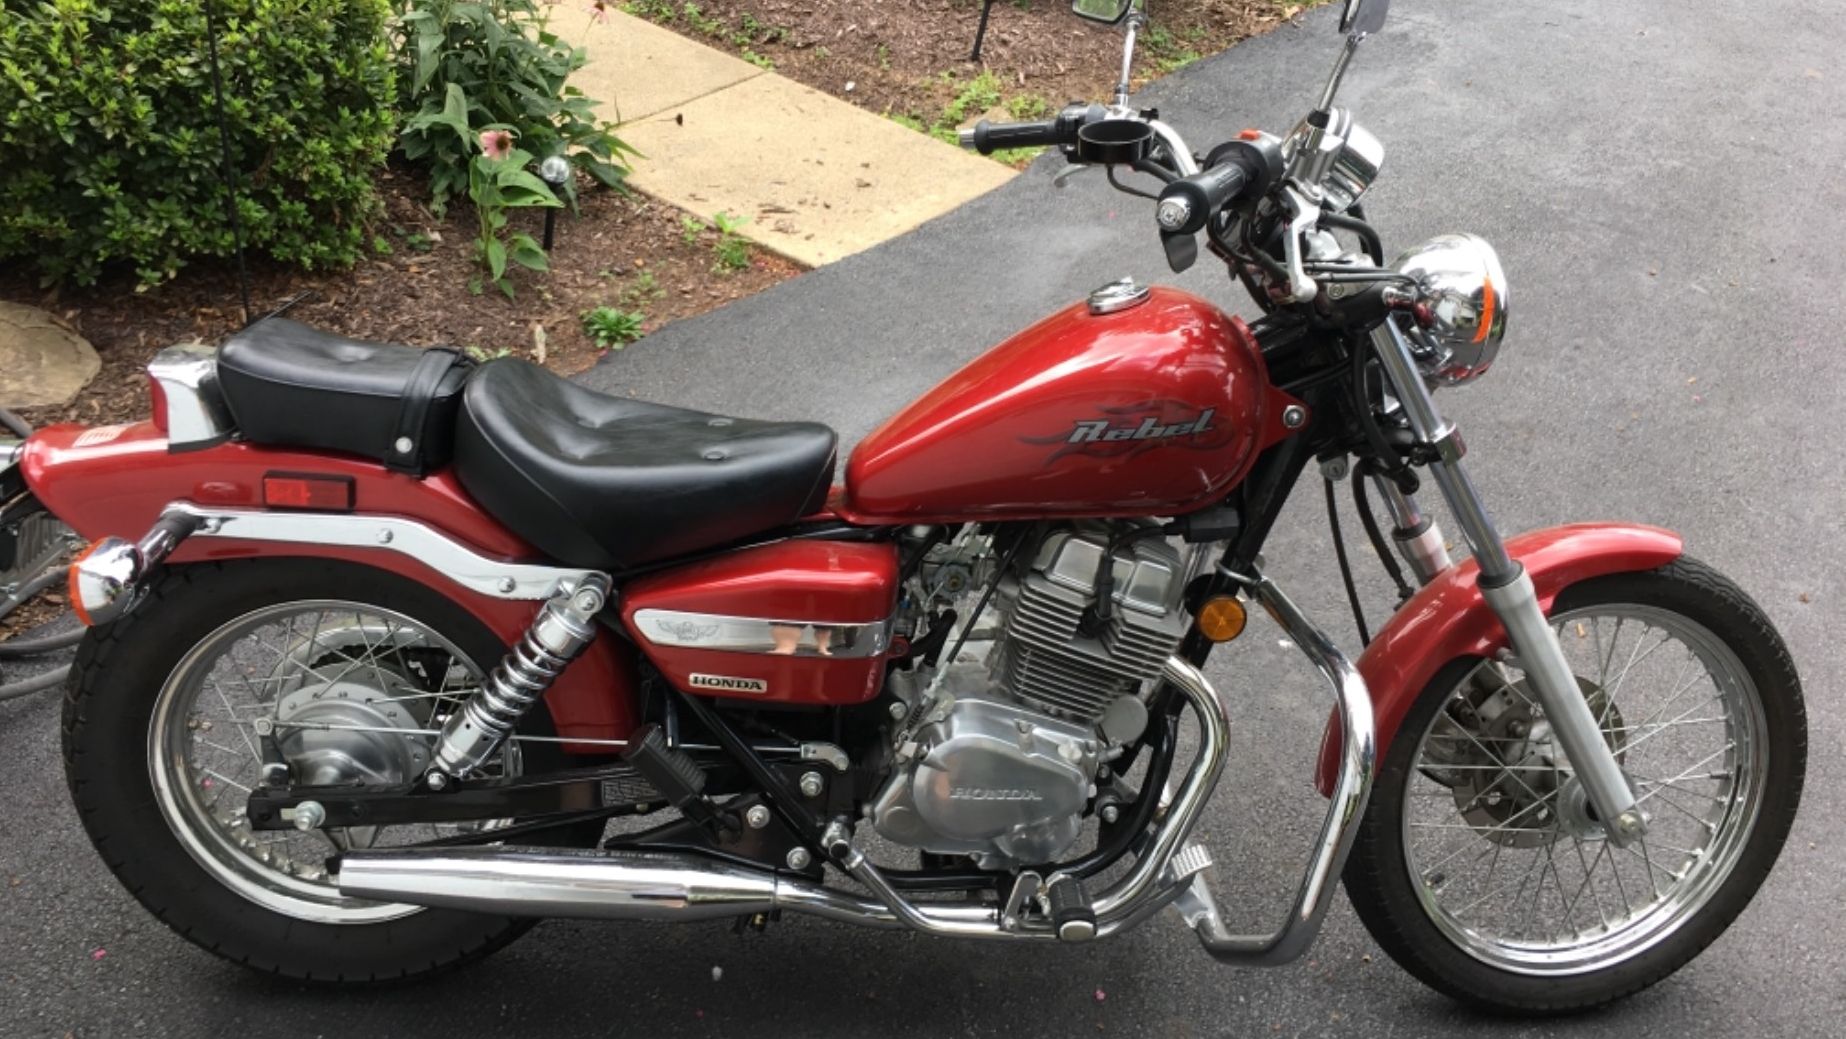 Honda CMX 250 Rebel for rent near Purcellville , VA | Riders Share